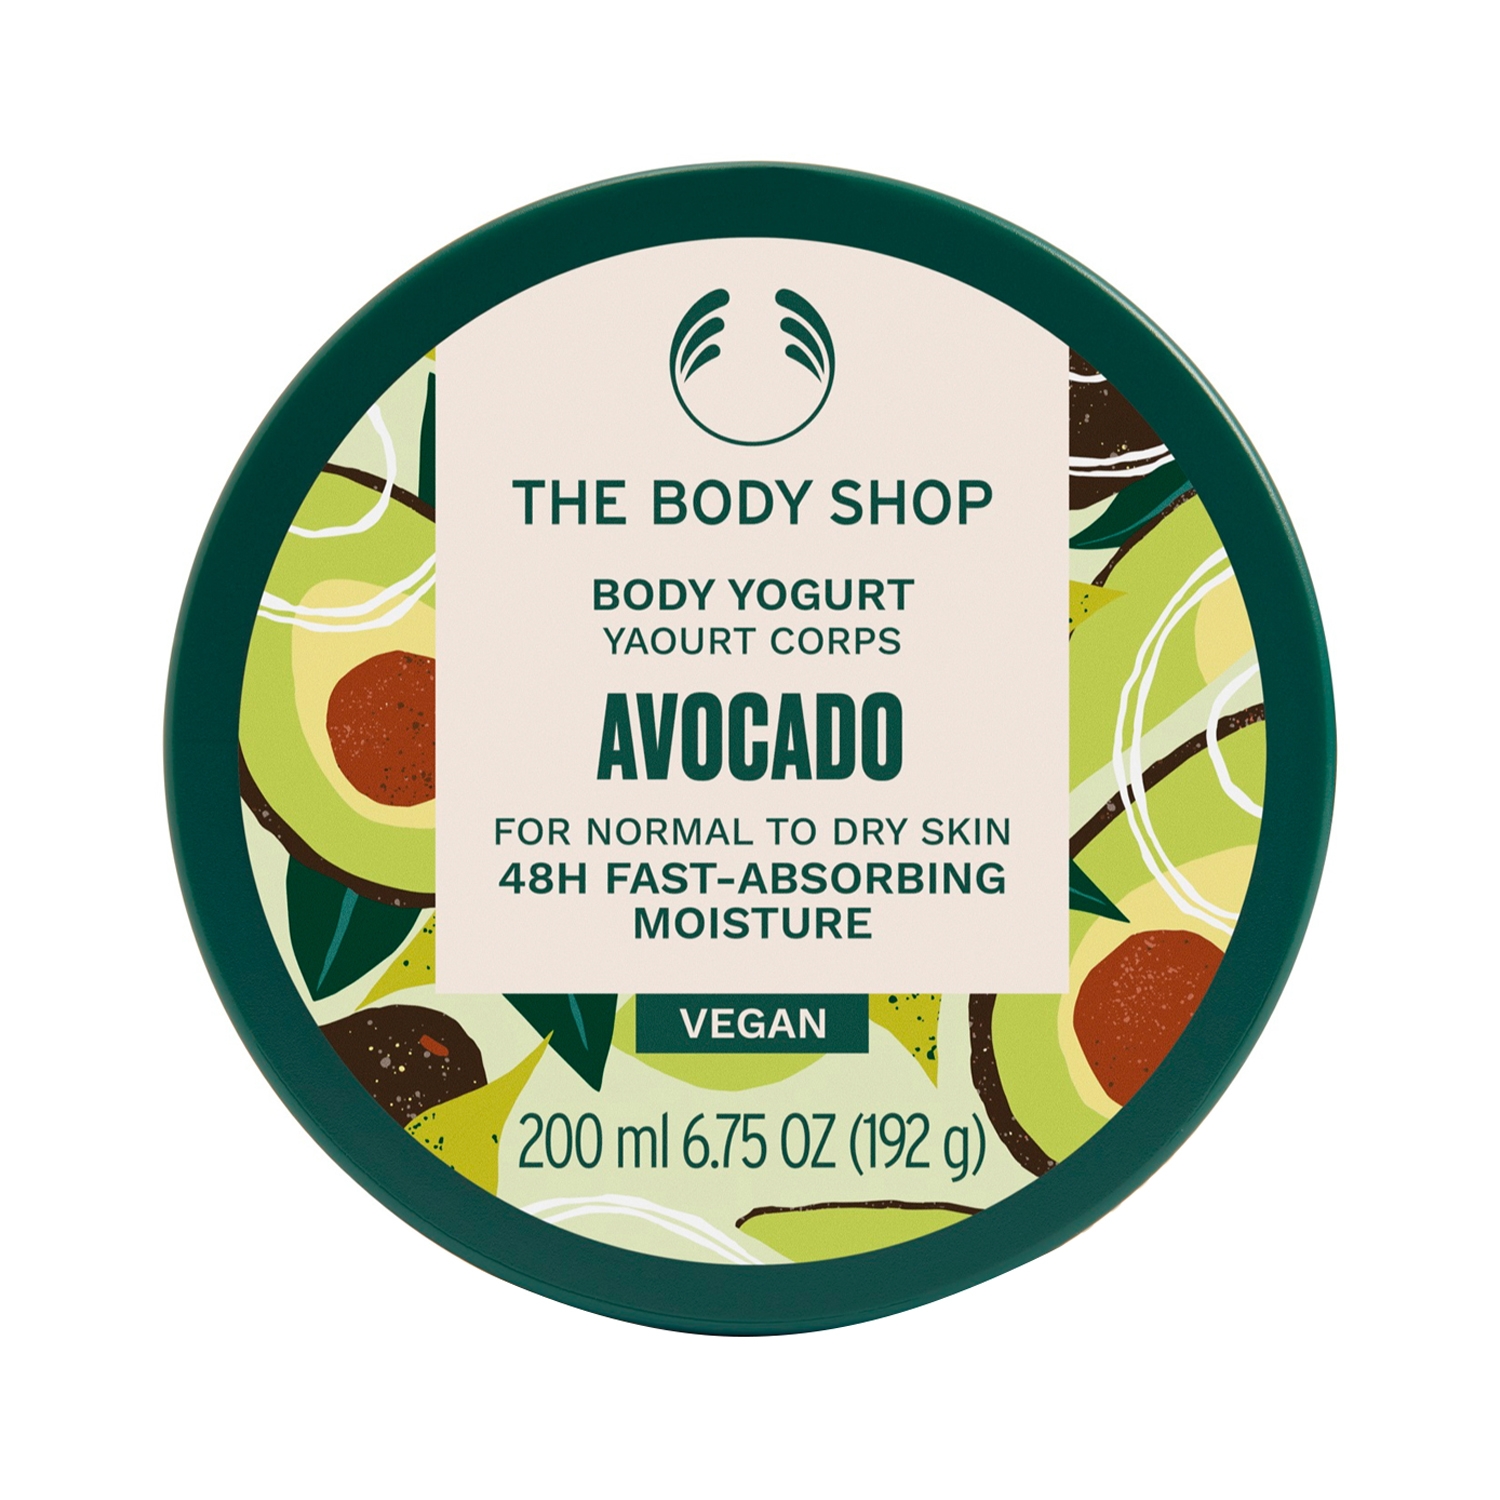 The Body Shop | The Body Shop Avocado Body Yogurt (200ml)